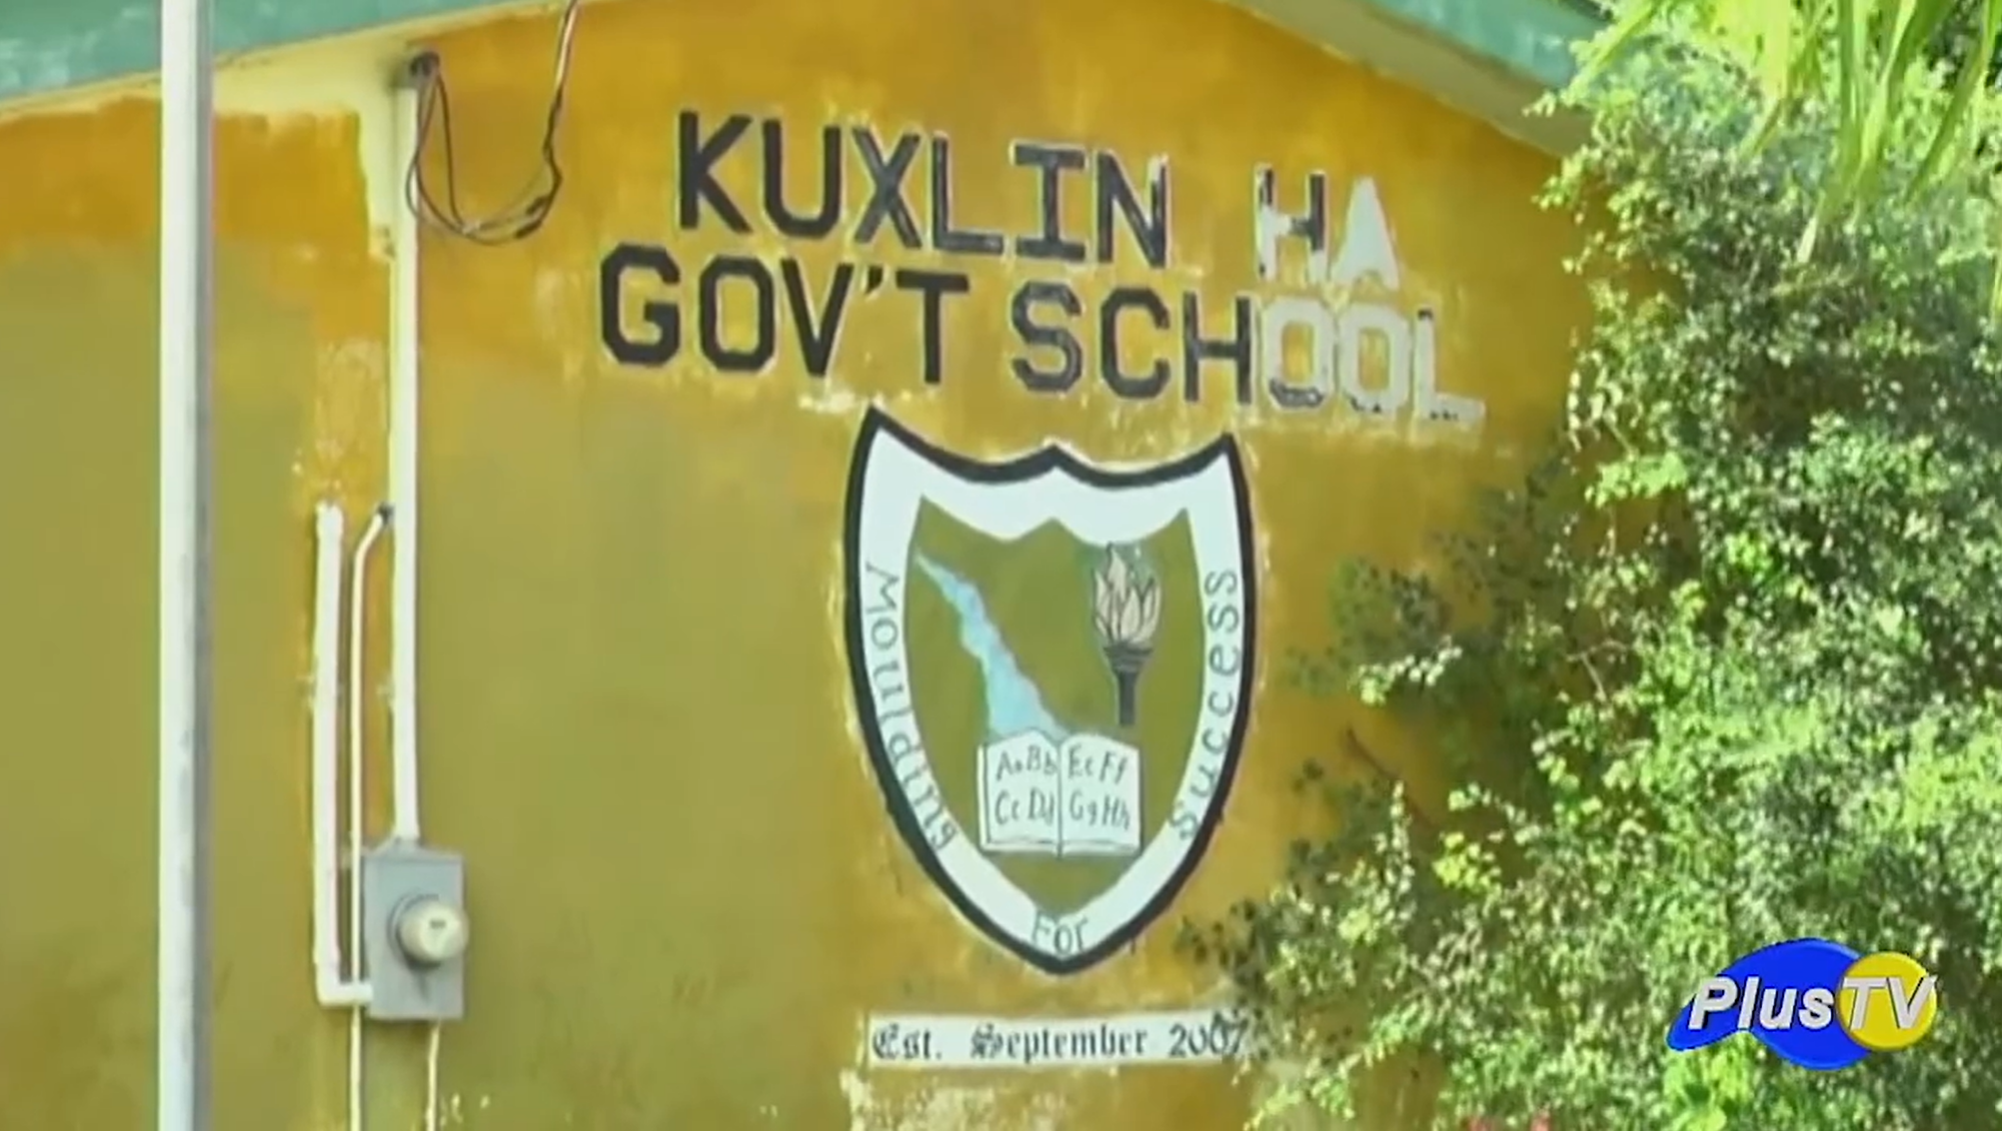 Kuxlin Ha School